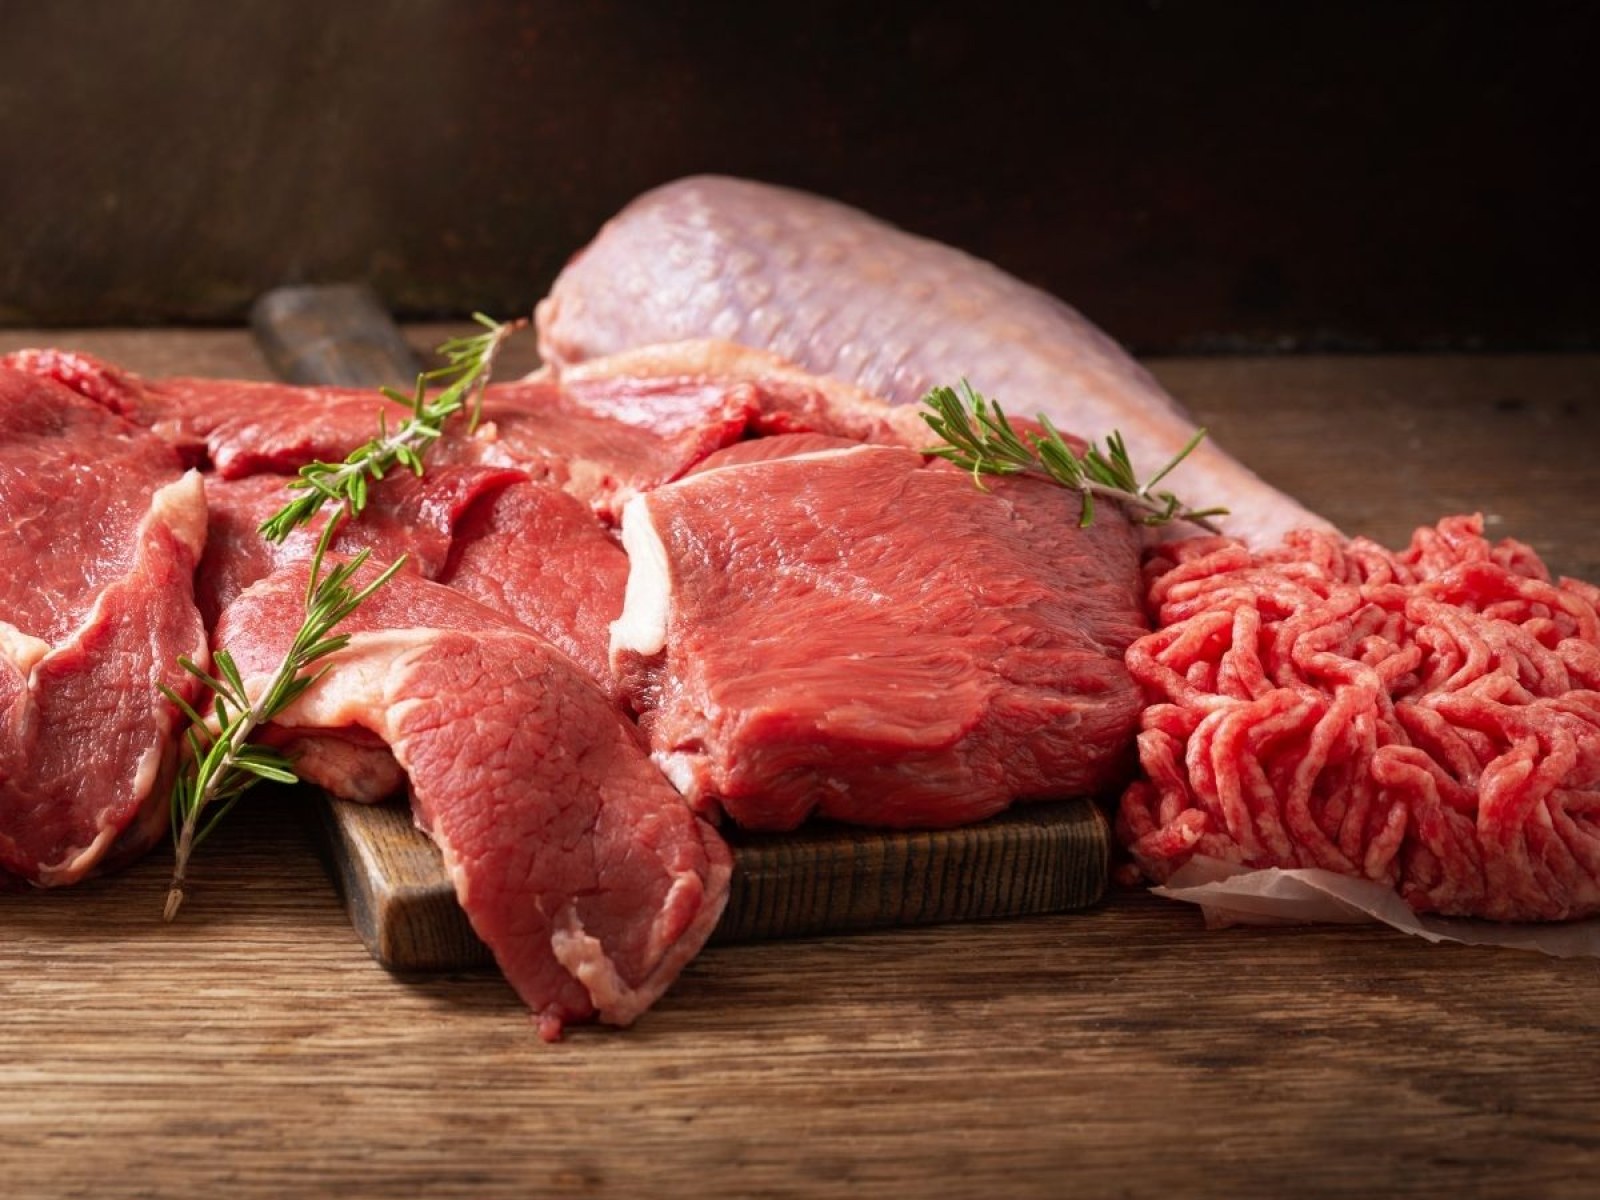 Raw Beef, Butchery Image & Photo (Free Trial)